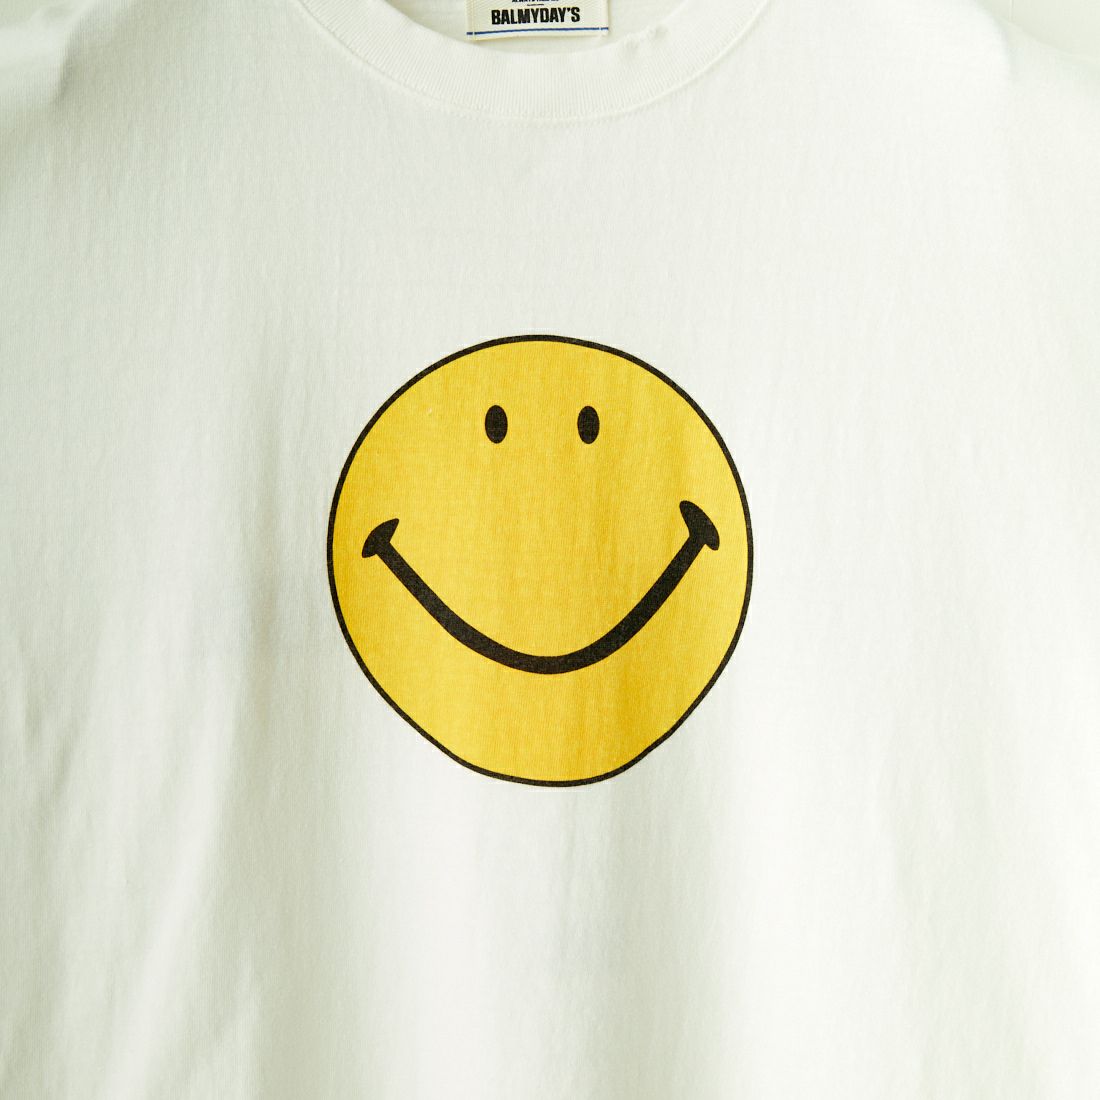 BALMYDAY'S [バルミーデイズ] SMILEY FACE プリントTシャツ [BAL-24SS-06] OFF